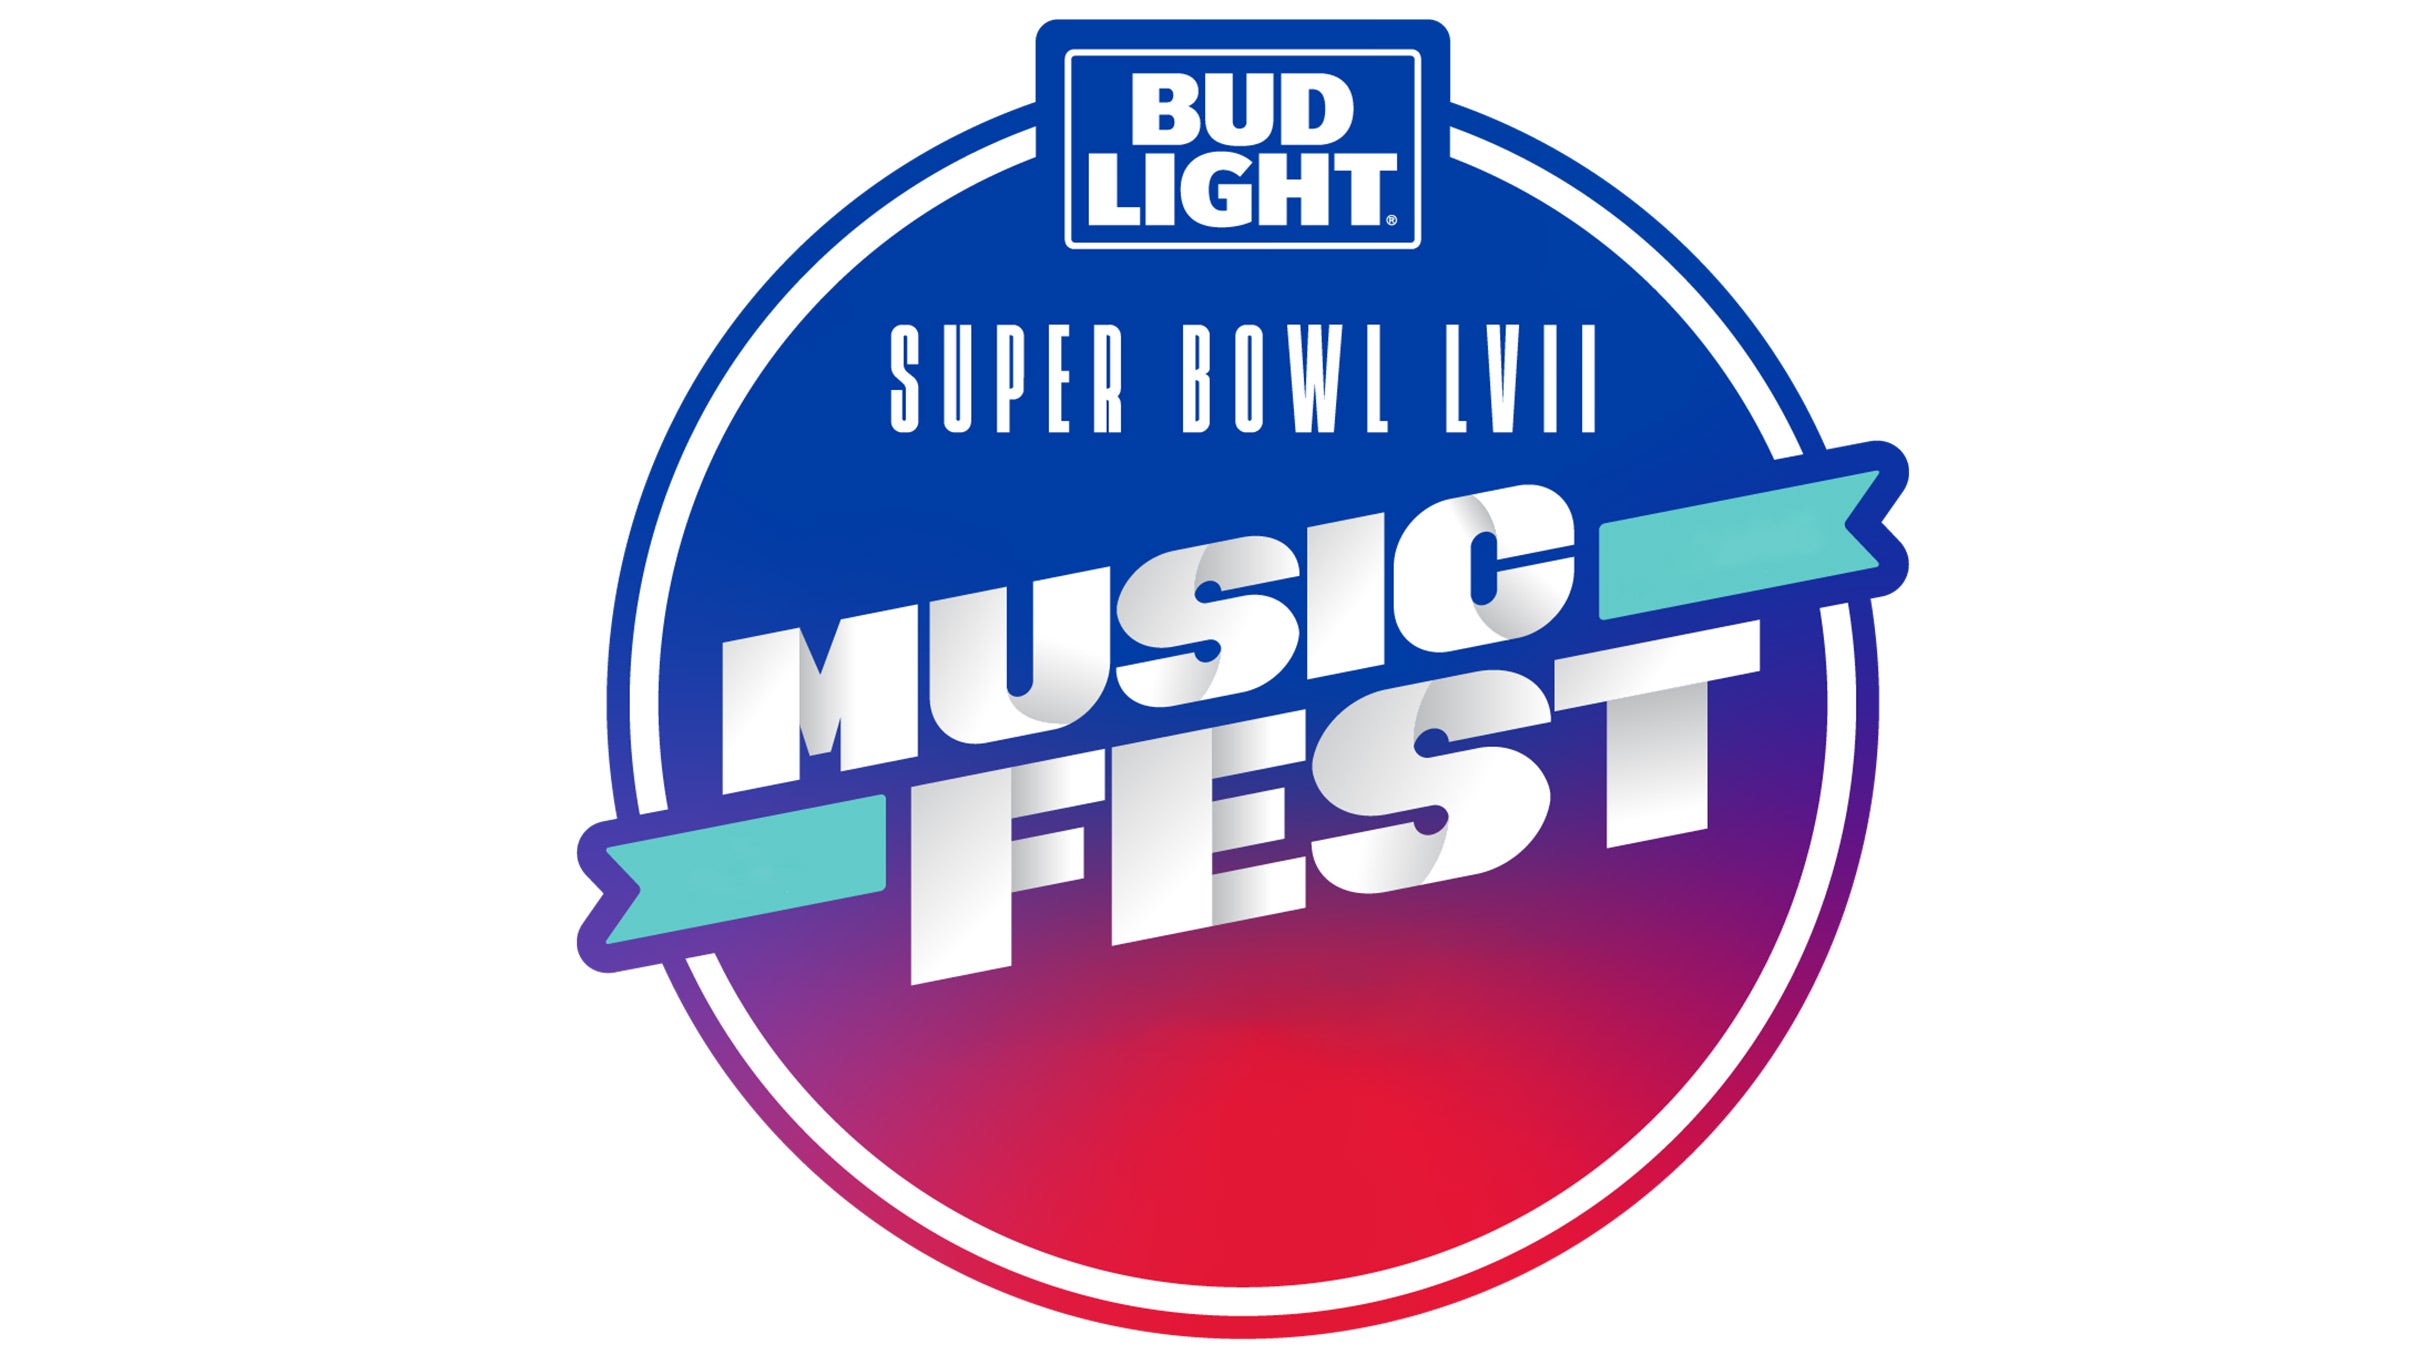 Bud Light Super Bowl Music Fest - Paramore presale code for concert tickets in Phoenix, AZ (Footprint Center)